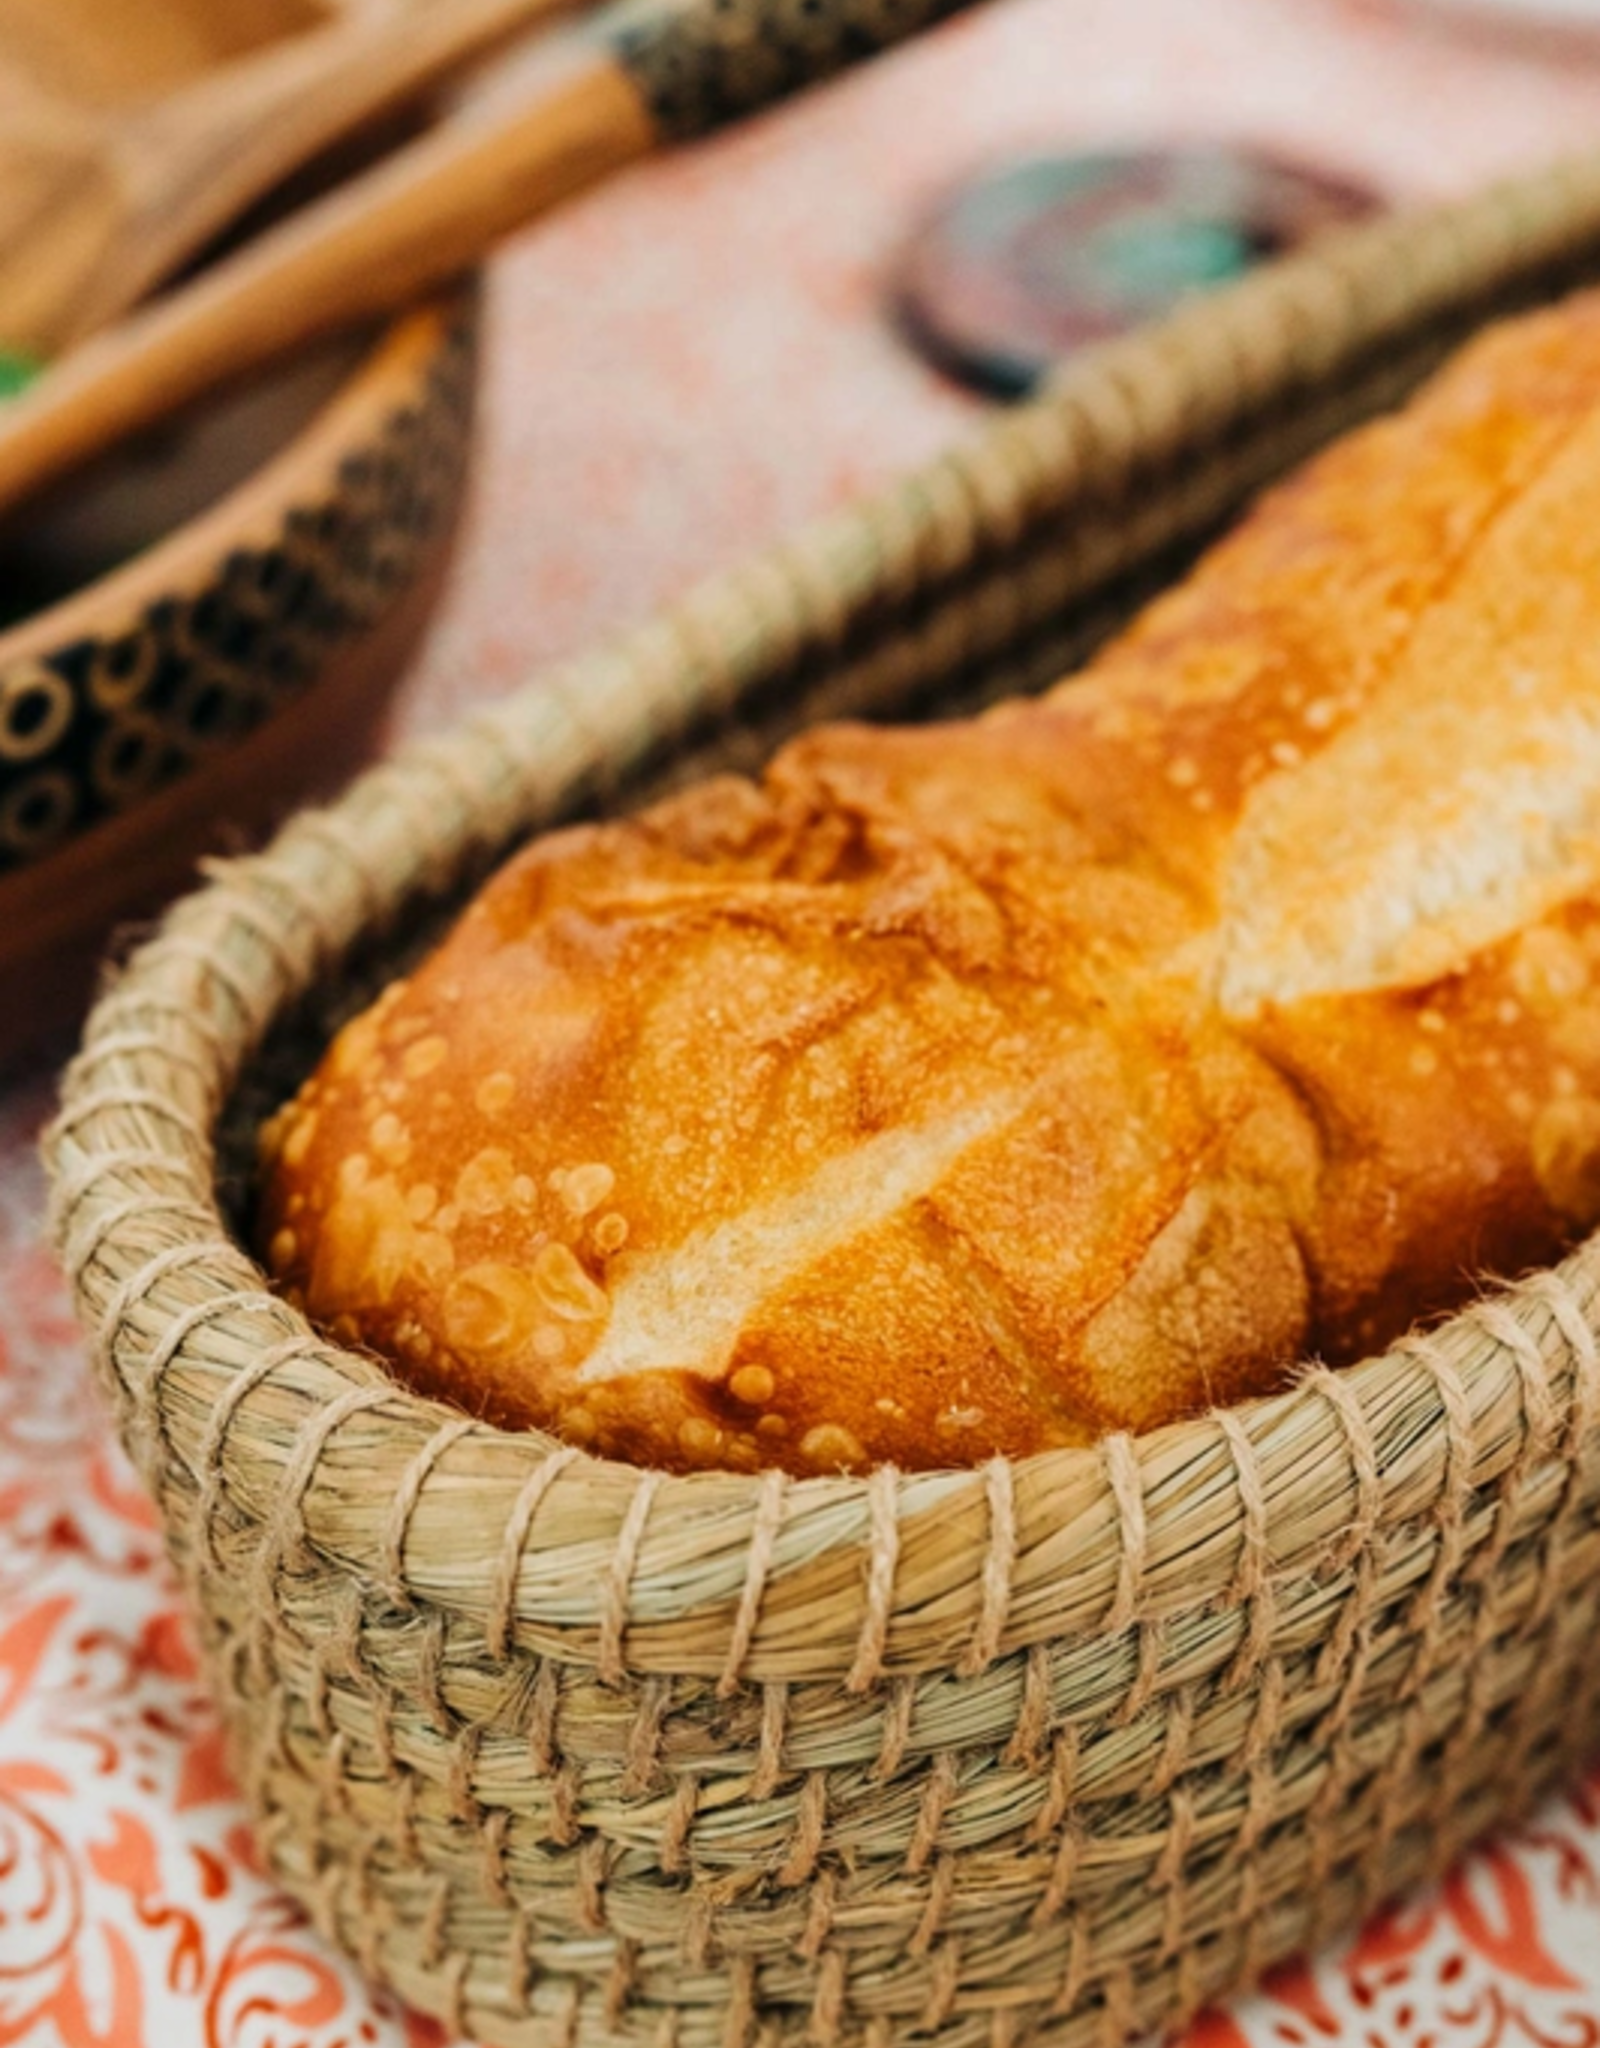 Ten Thousand Villages Toasty Long Bread Basket